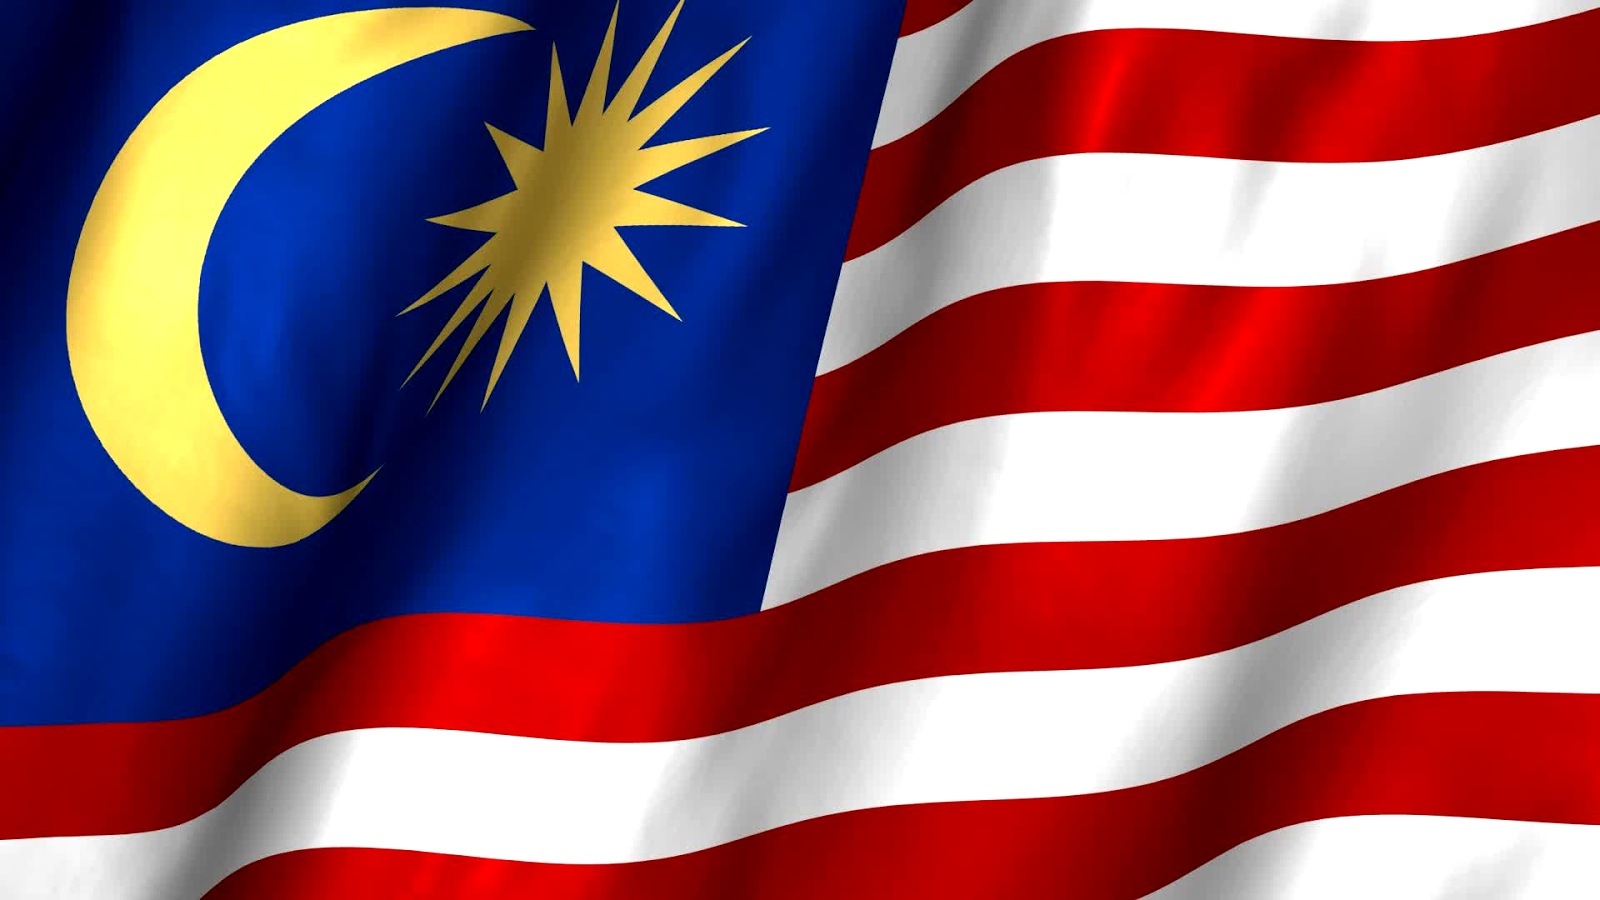 Gambar Bendera Malaysia Berkibar Gambar Bendera Bendera Malaysia